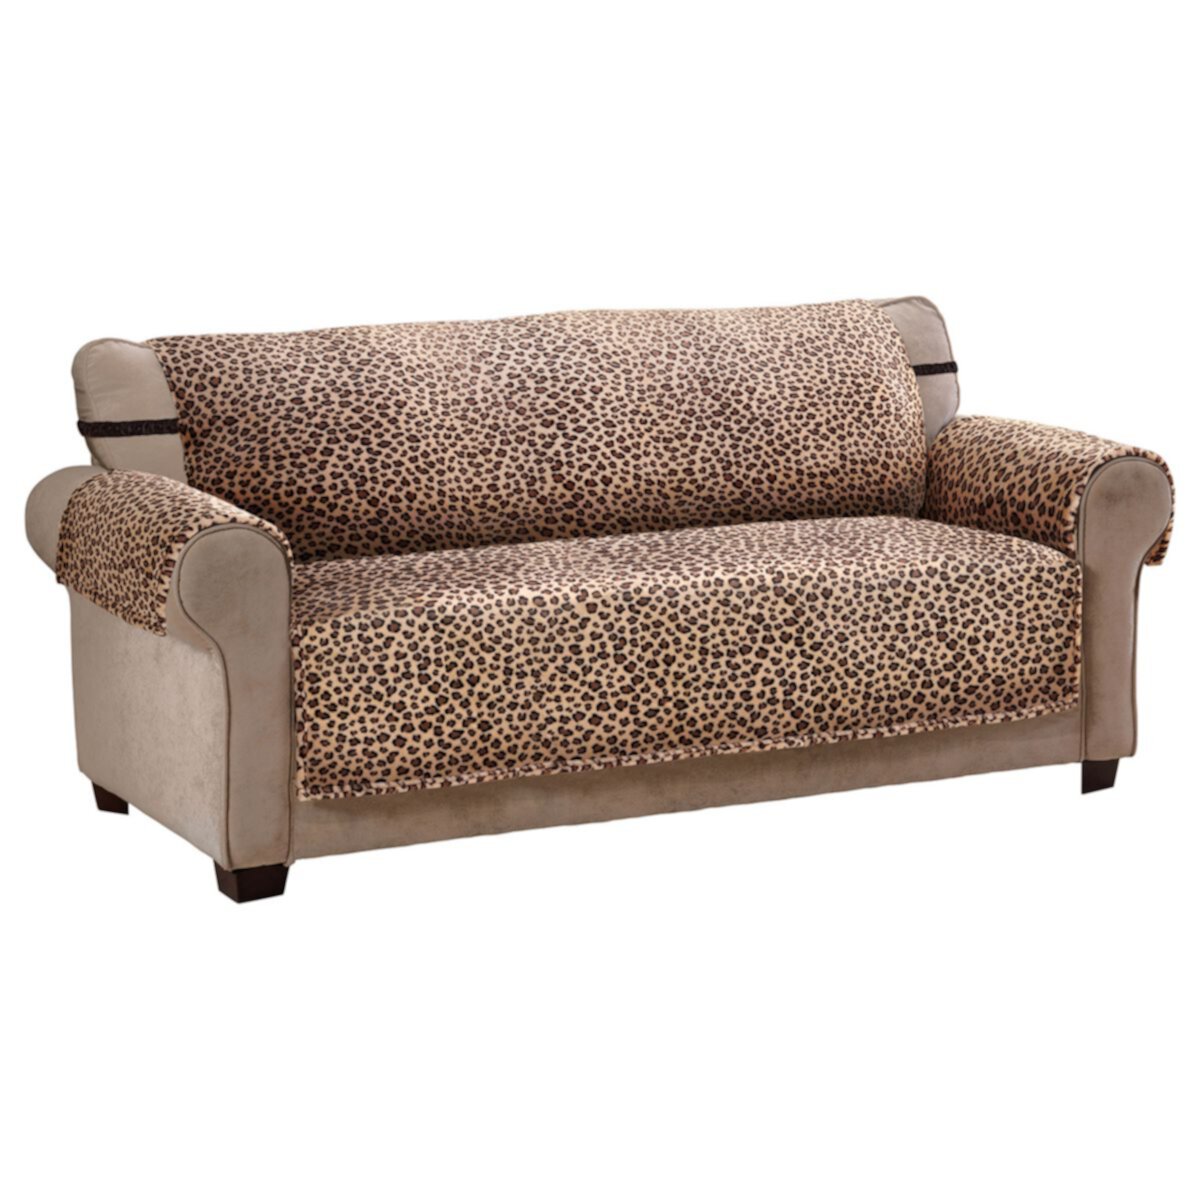 Jeffrey Home Innovative Textile Solutions Leopard Plush XL Чехол для дивана и мебели Jeffrey Home